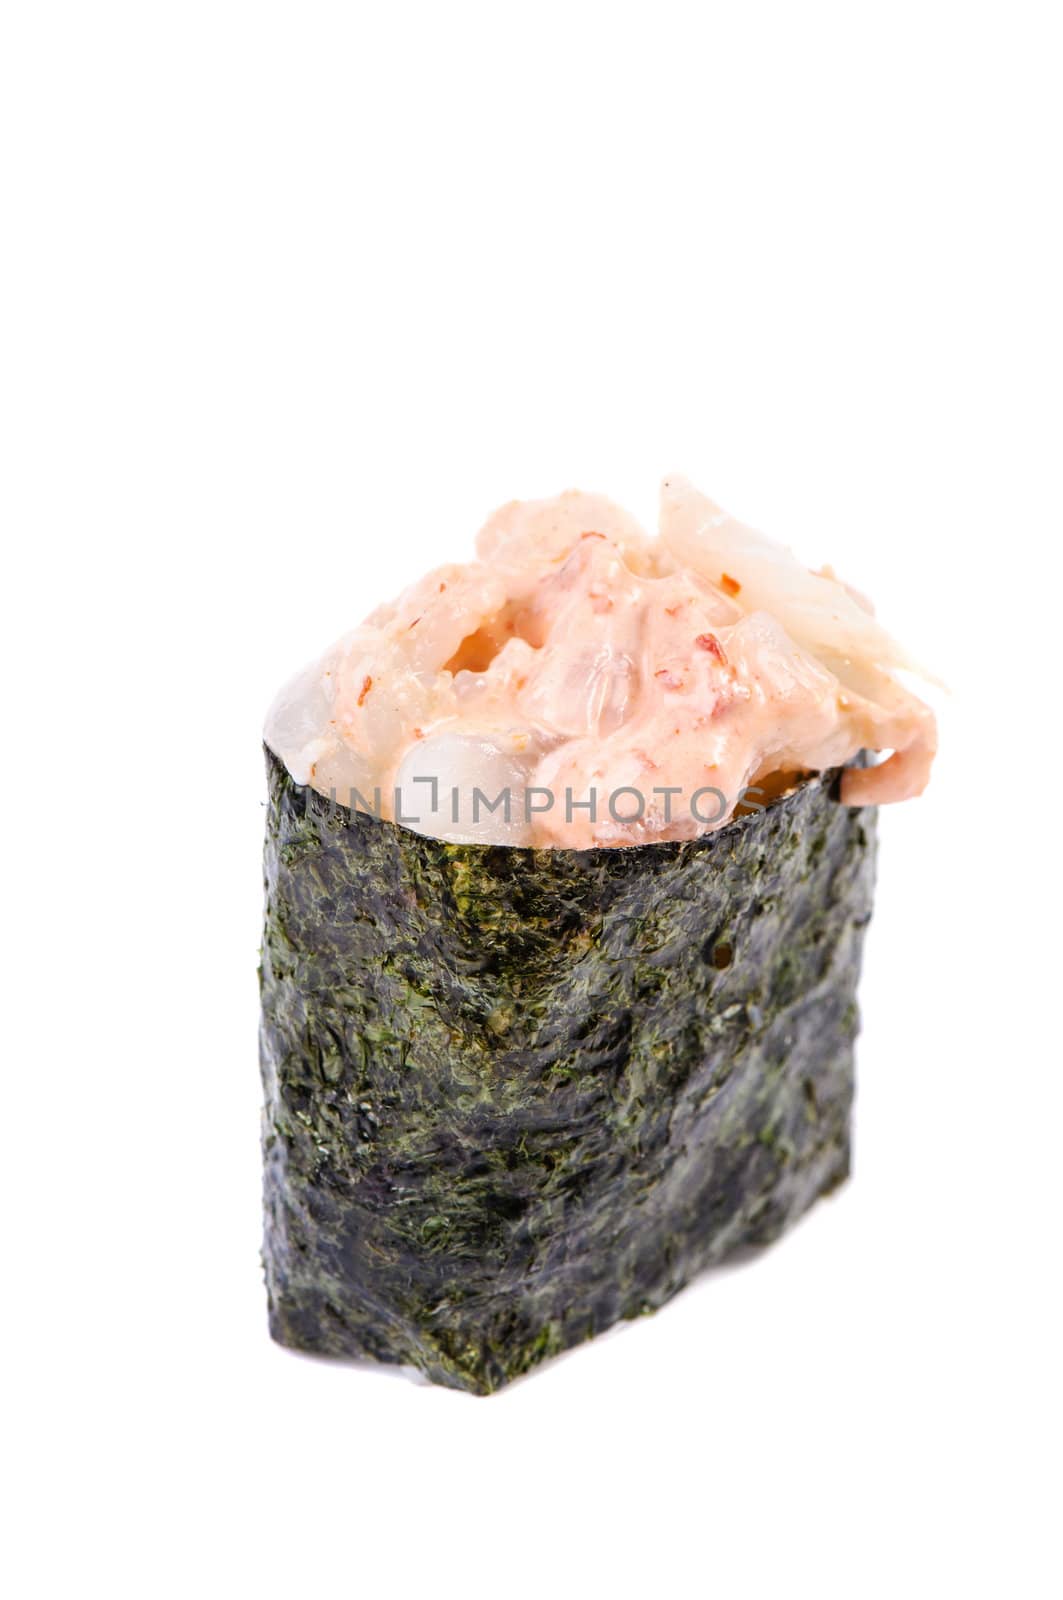 Spicy Tuna (maguro) Gunkan on white background isolated